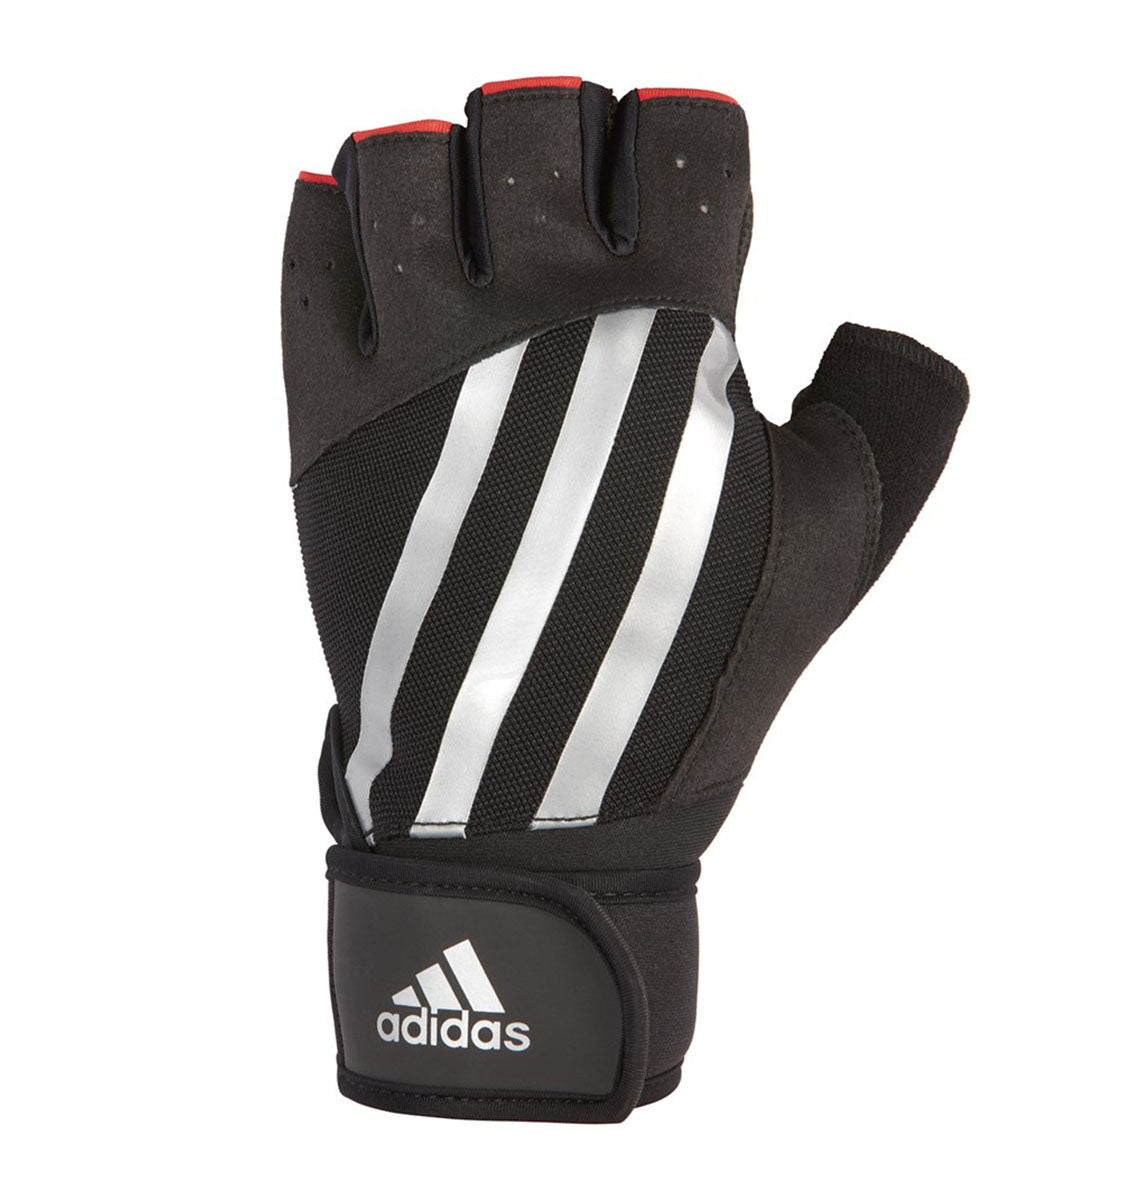 adidas Elite Training Gloves - Black/Silver - 7